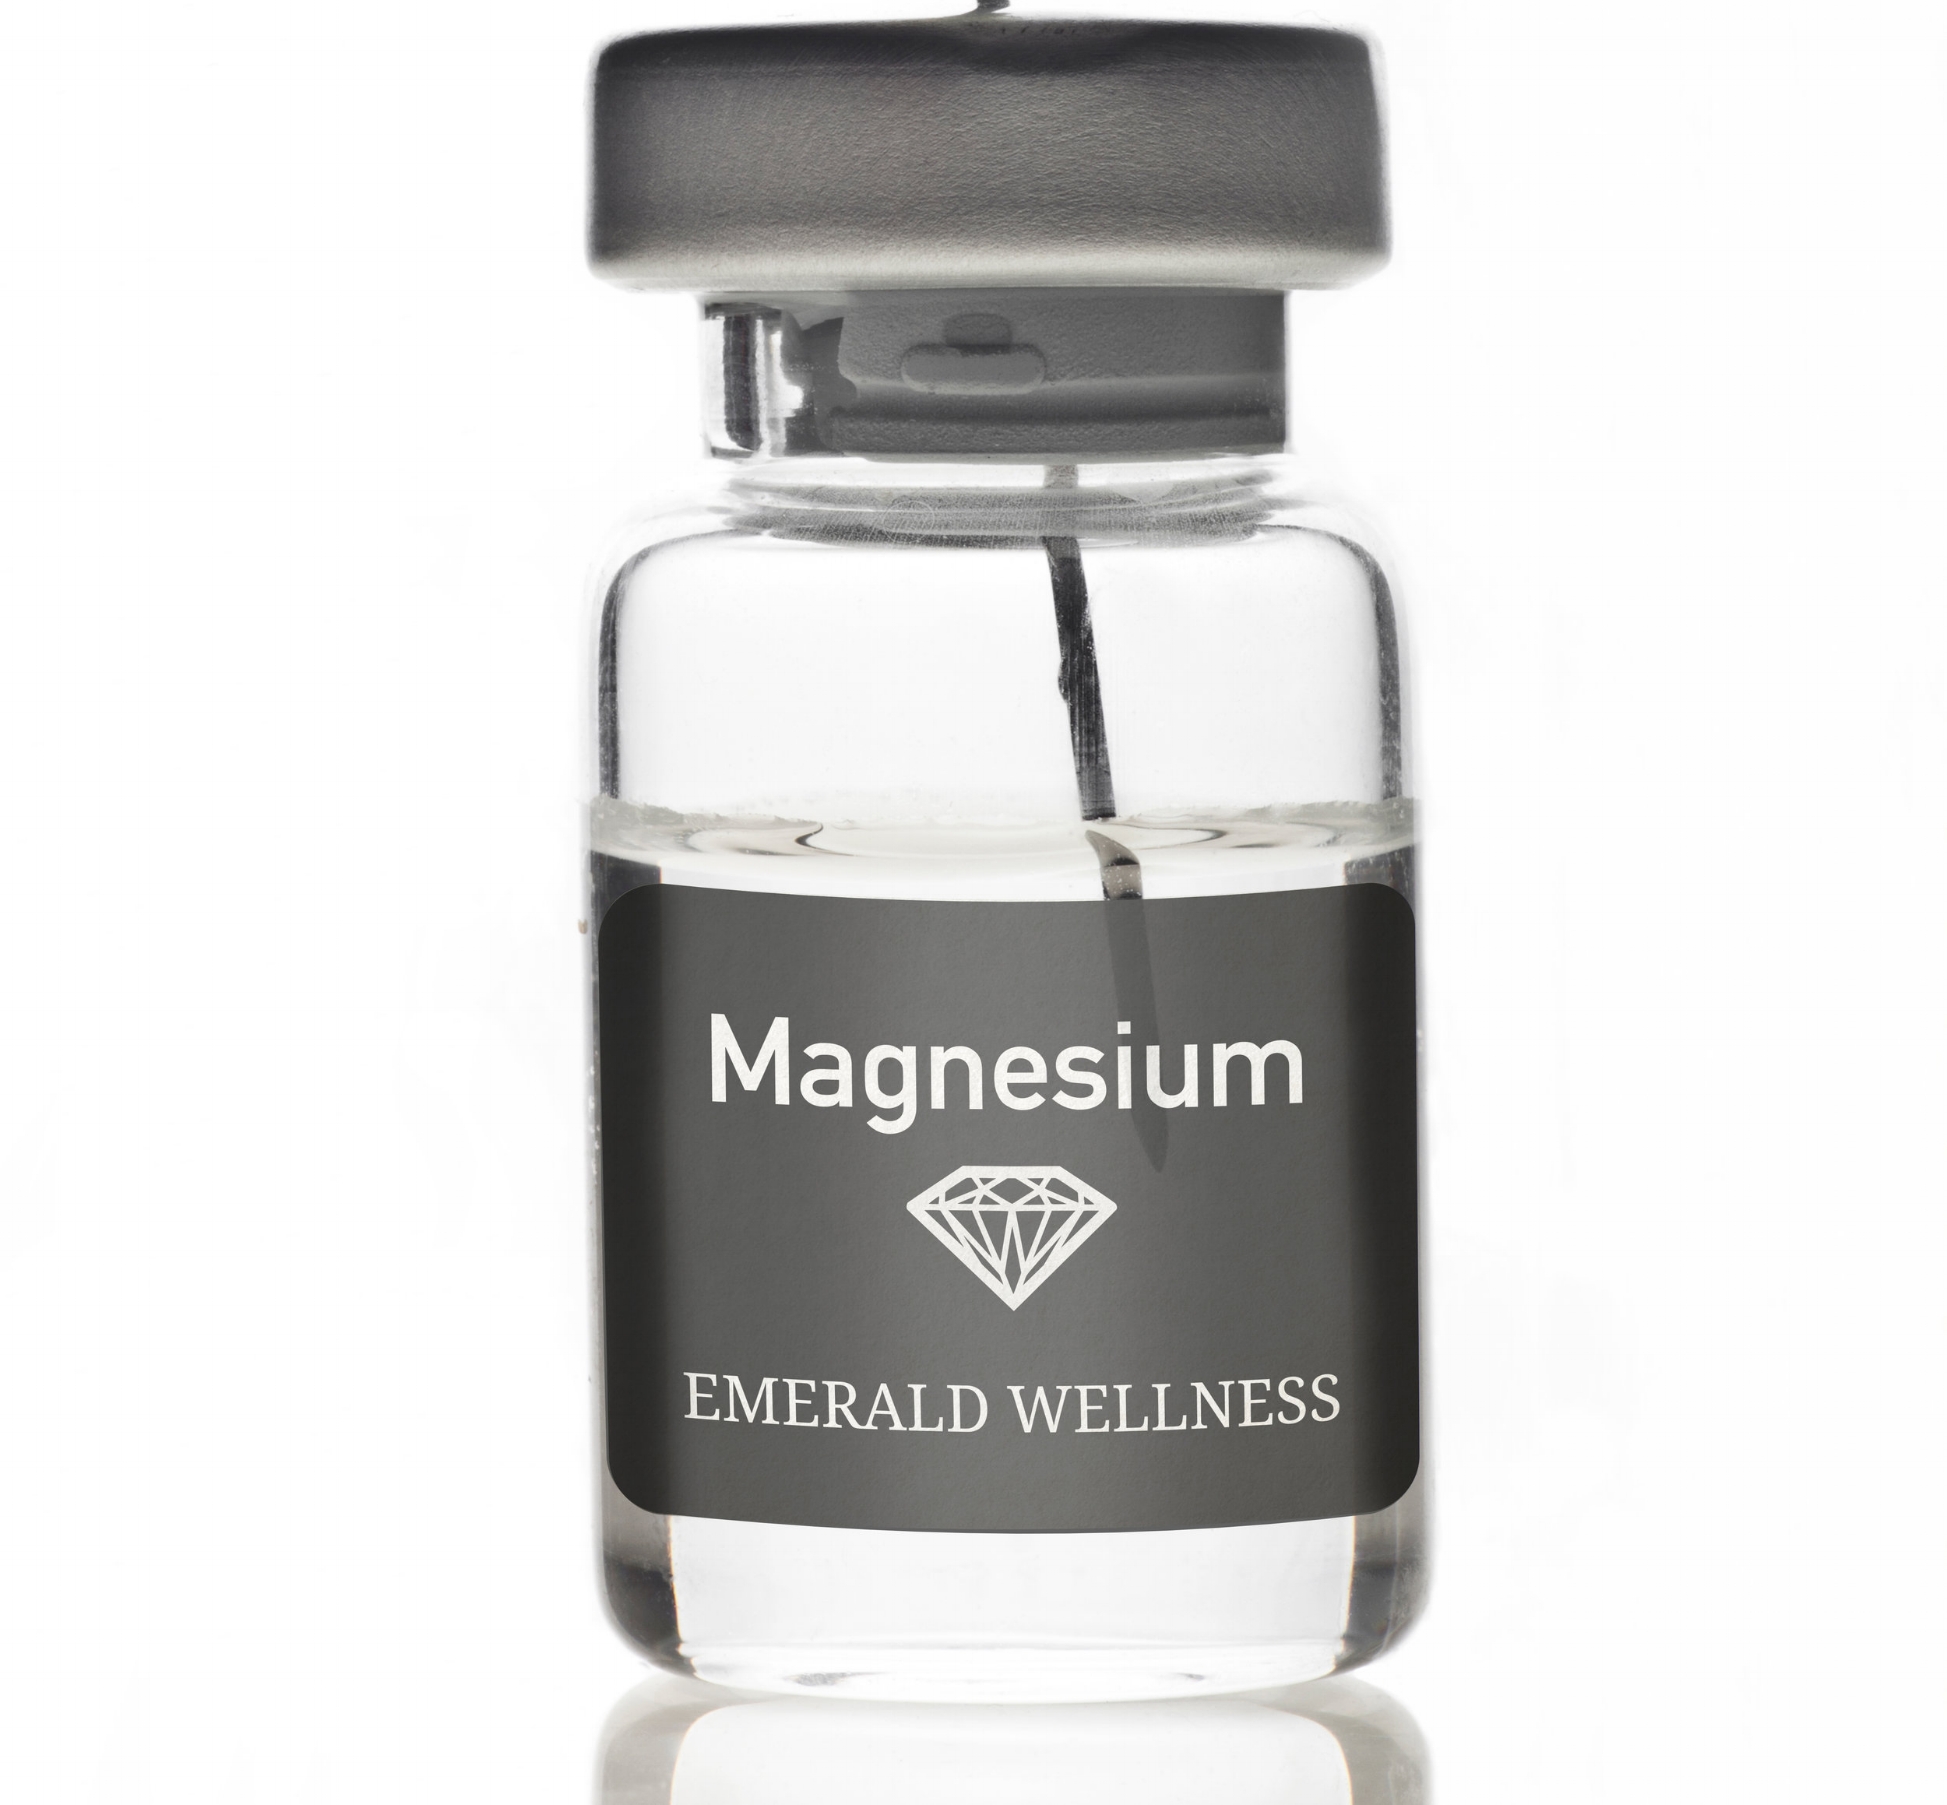 Magnesium IV Therapy Edmonton